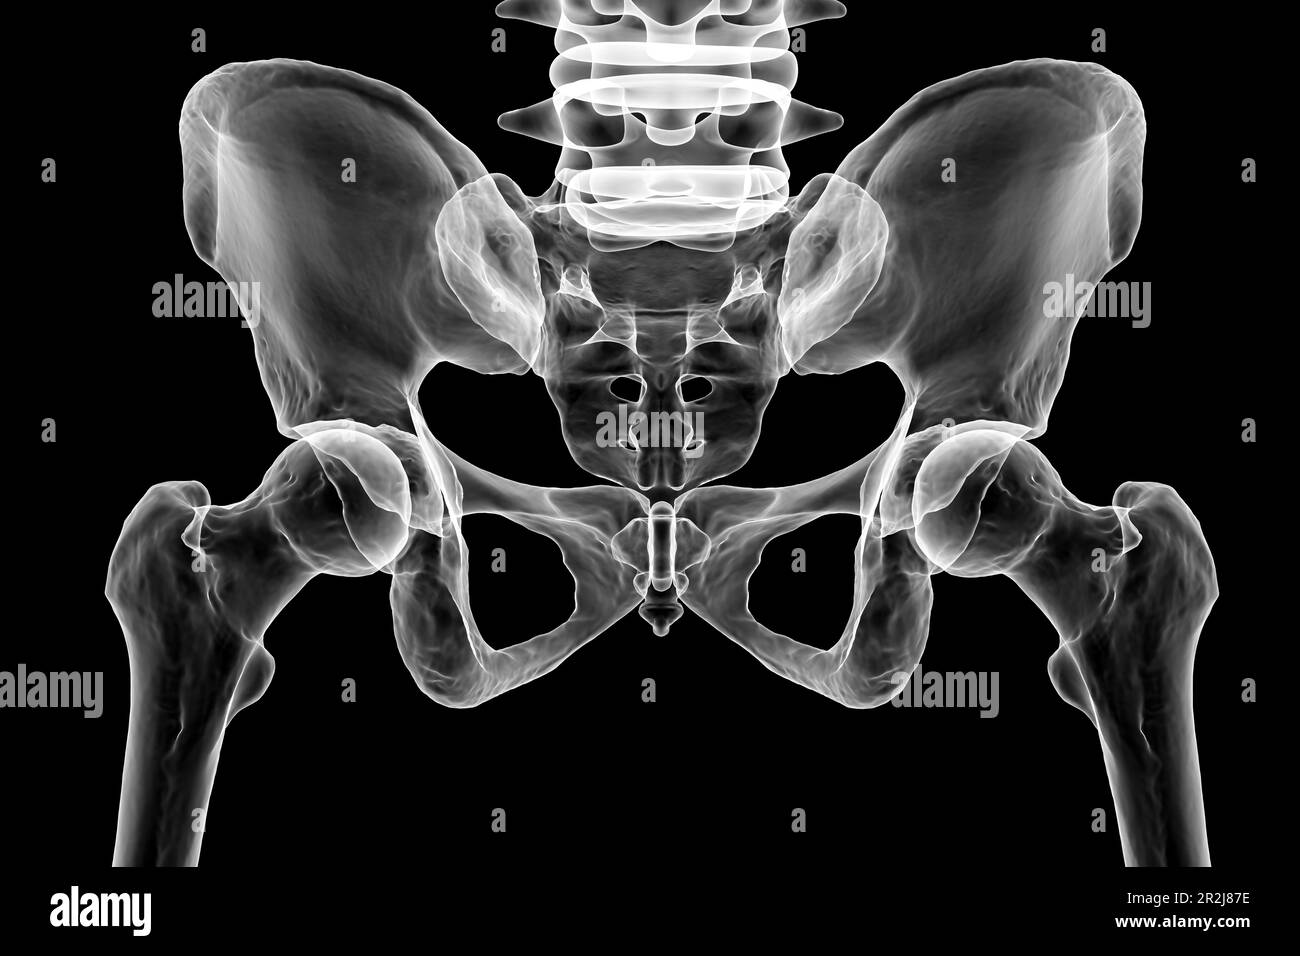 Anatomy of the pelvis bones, illustration Stock Photo - Alamy